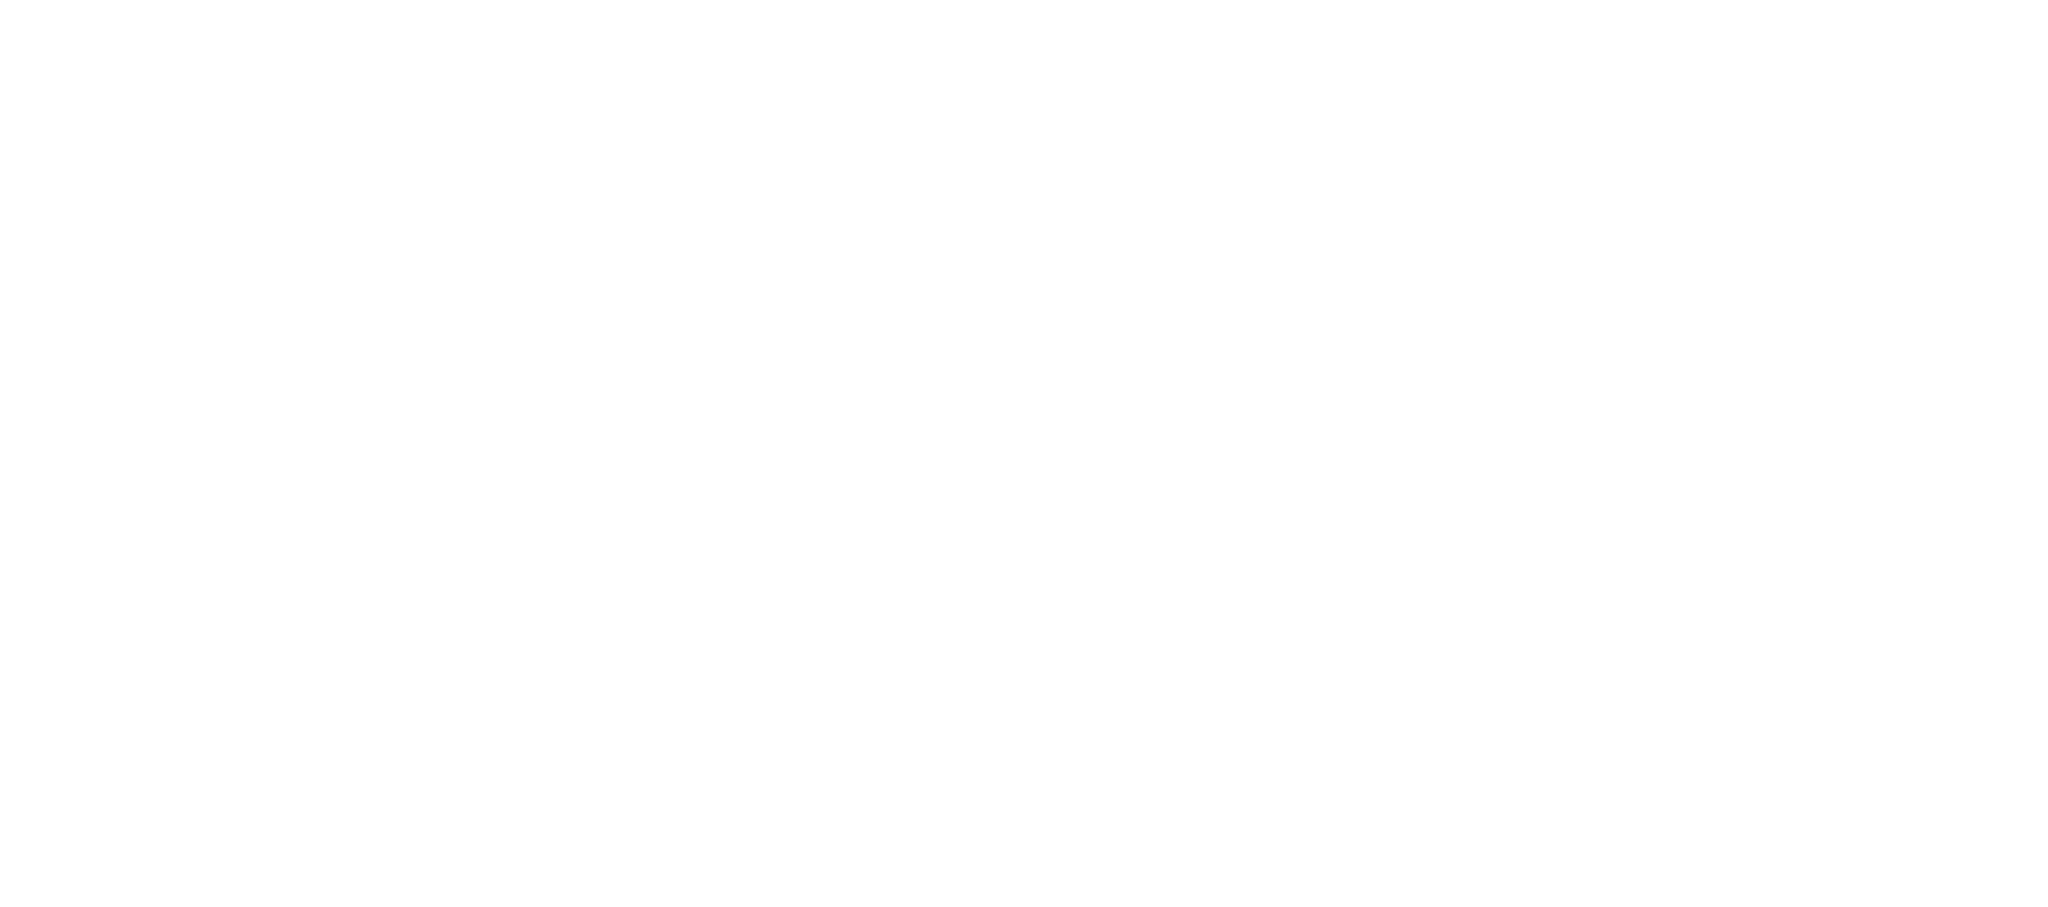 Flip logo white